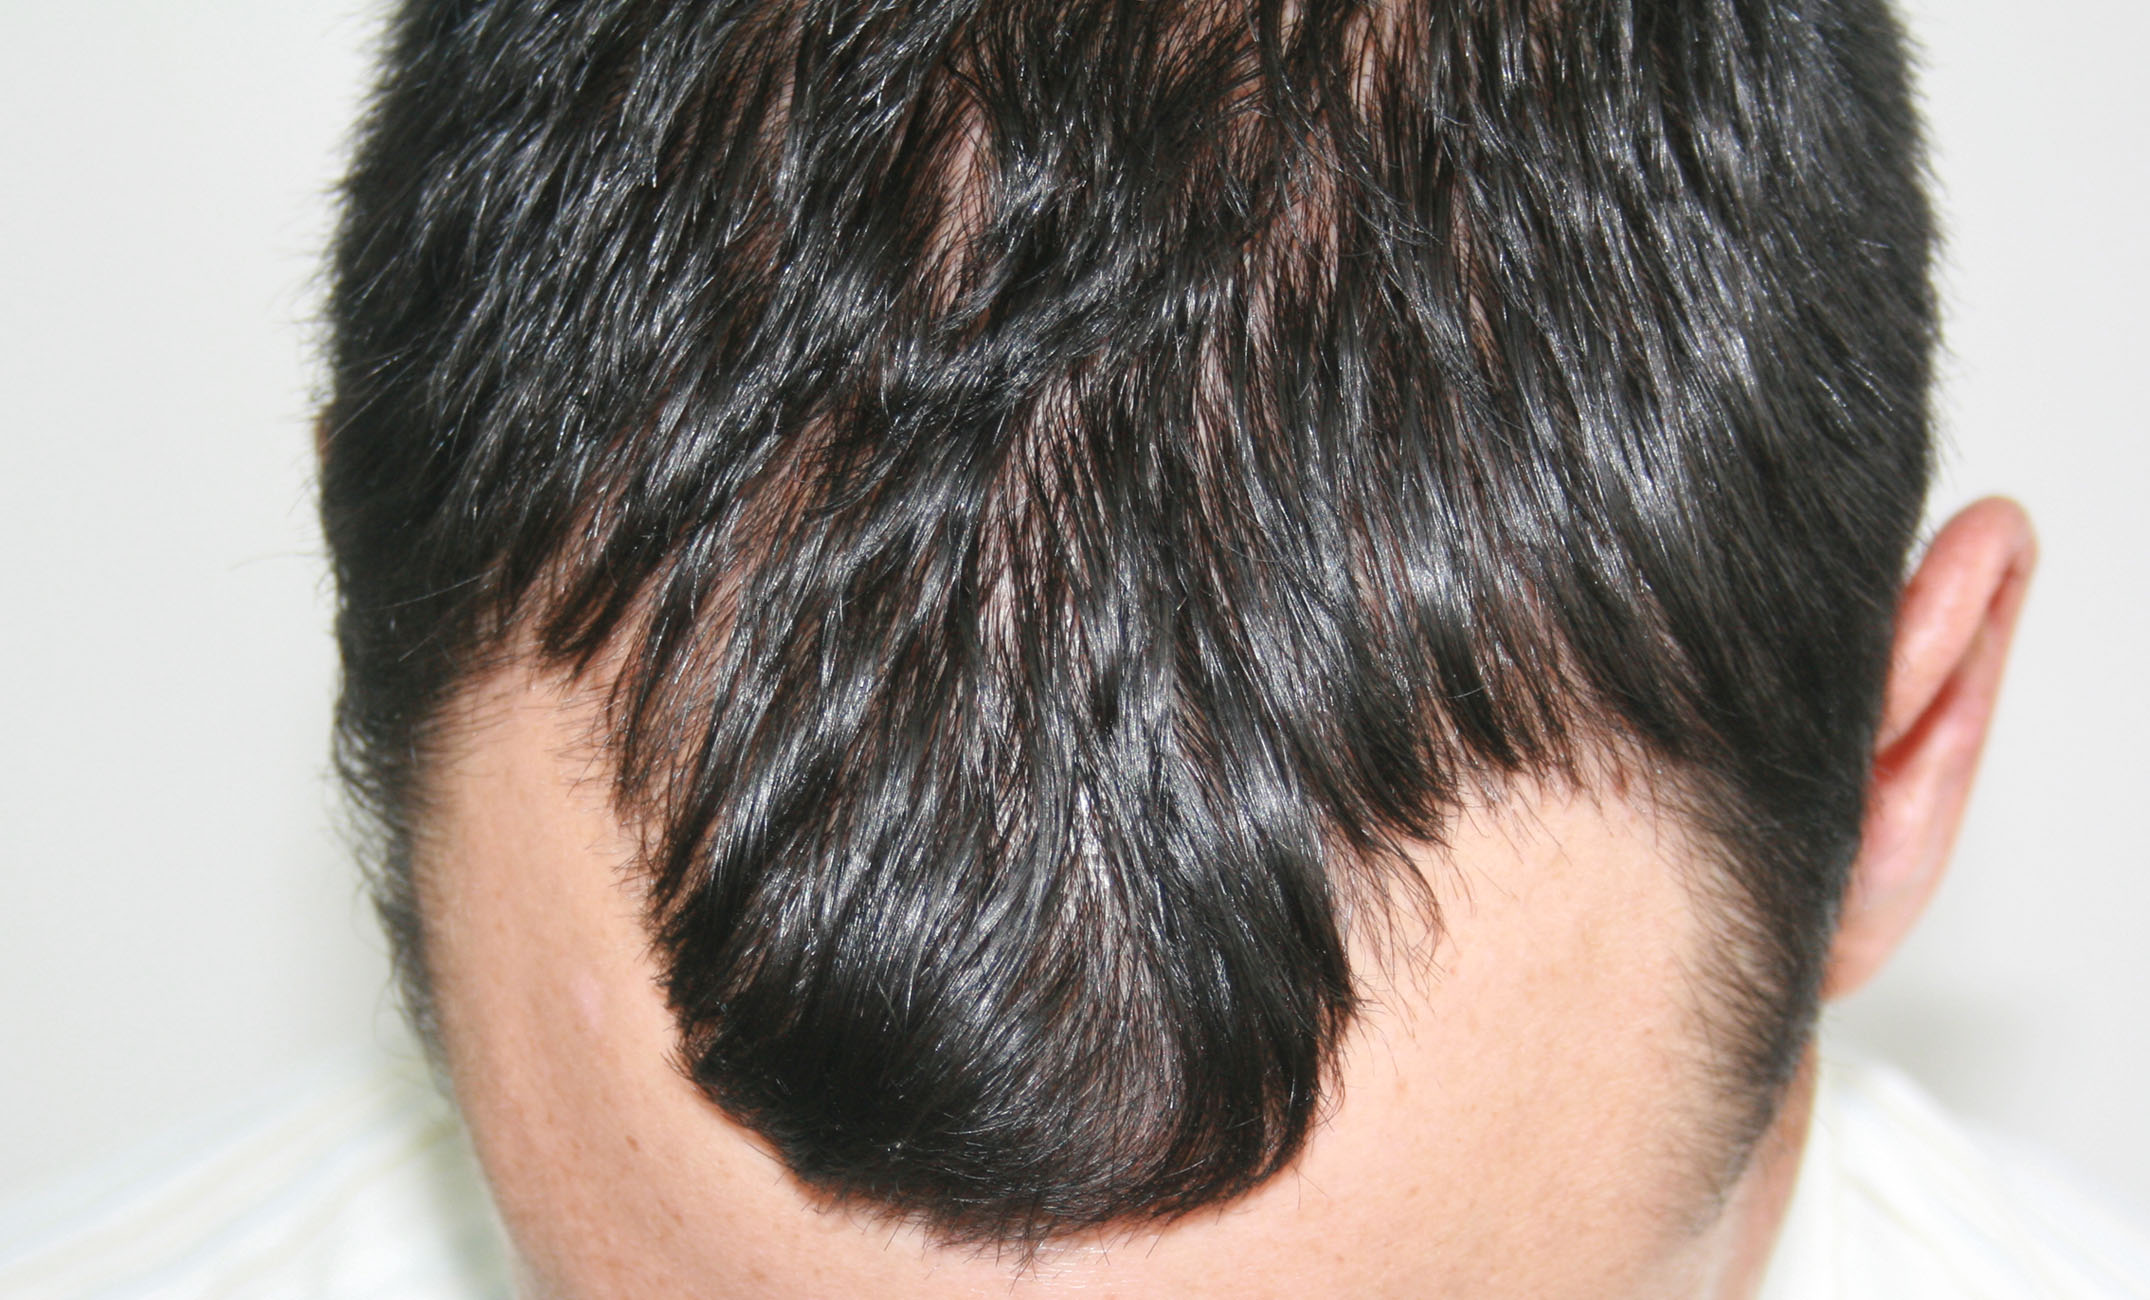 FUT Hair